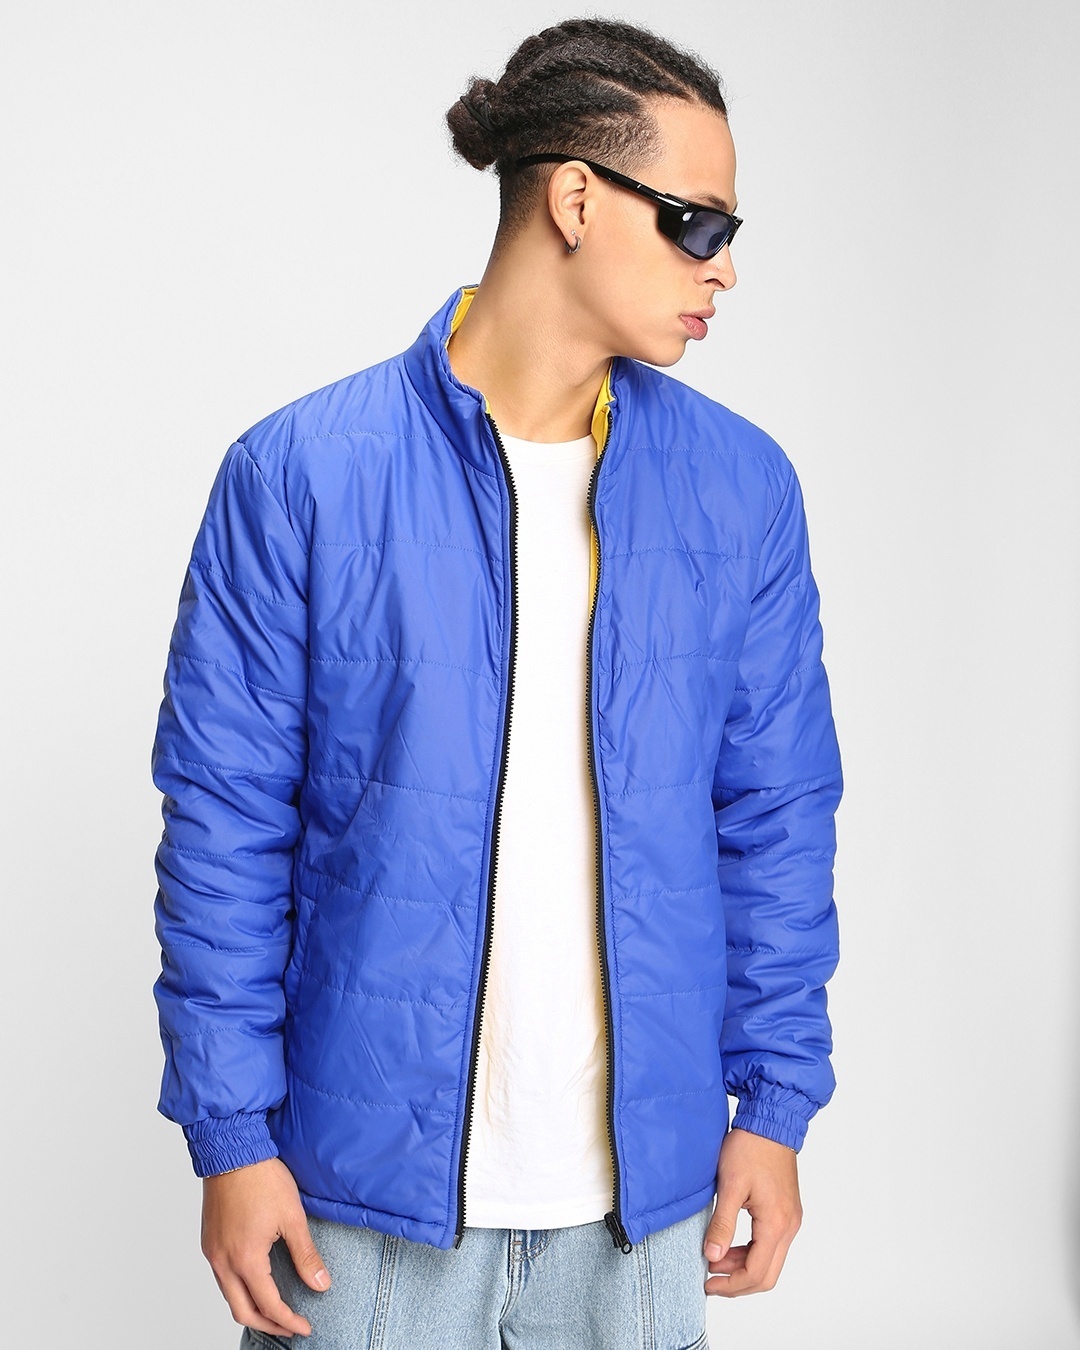 Buy Men's Blue & Yellow Reversible Puffer Jacket Online at Bewakoof